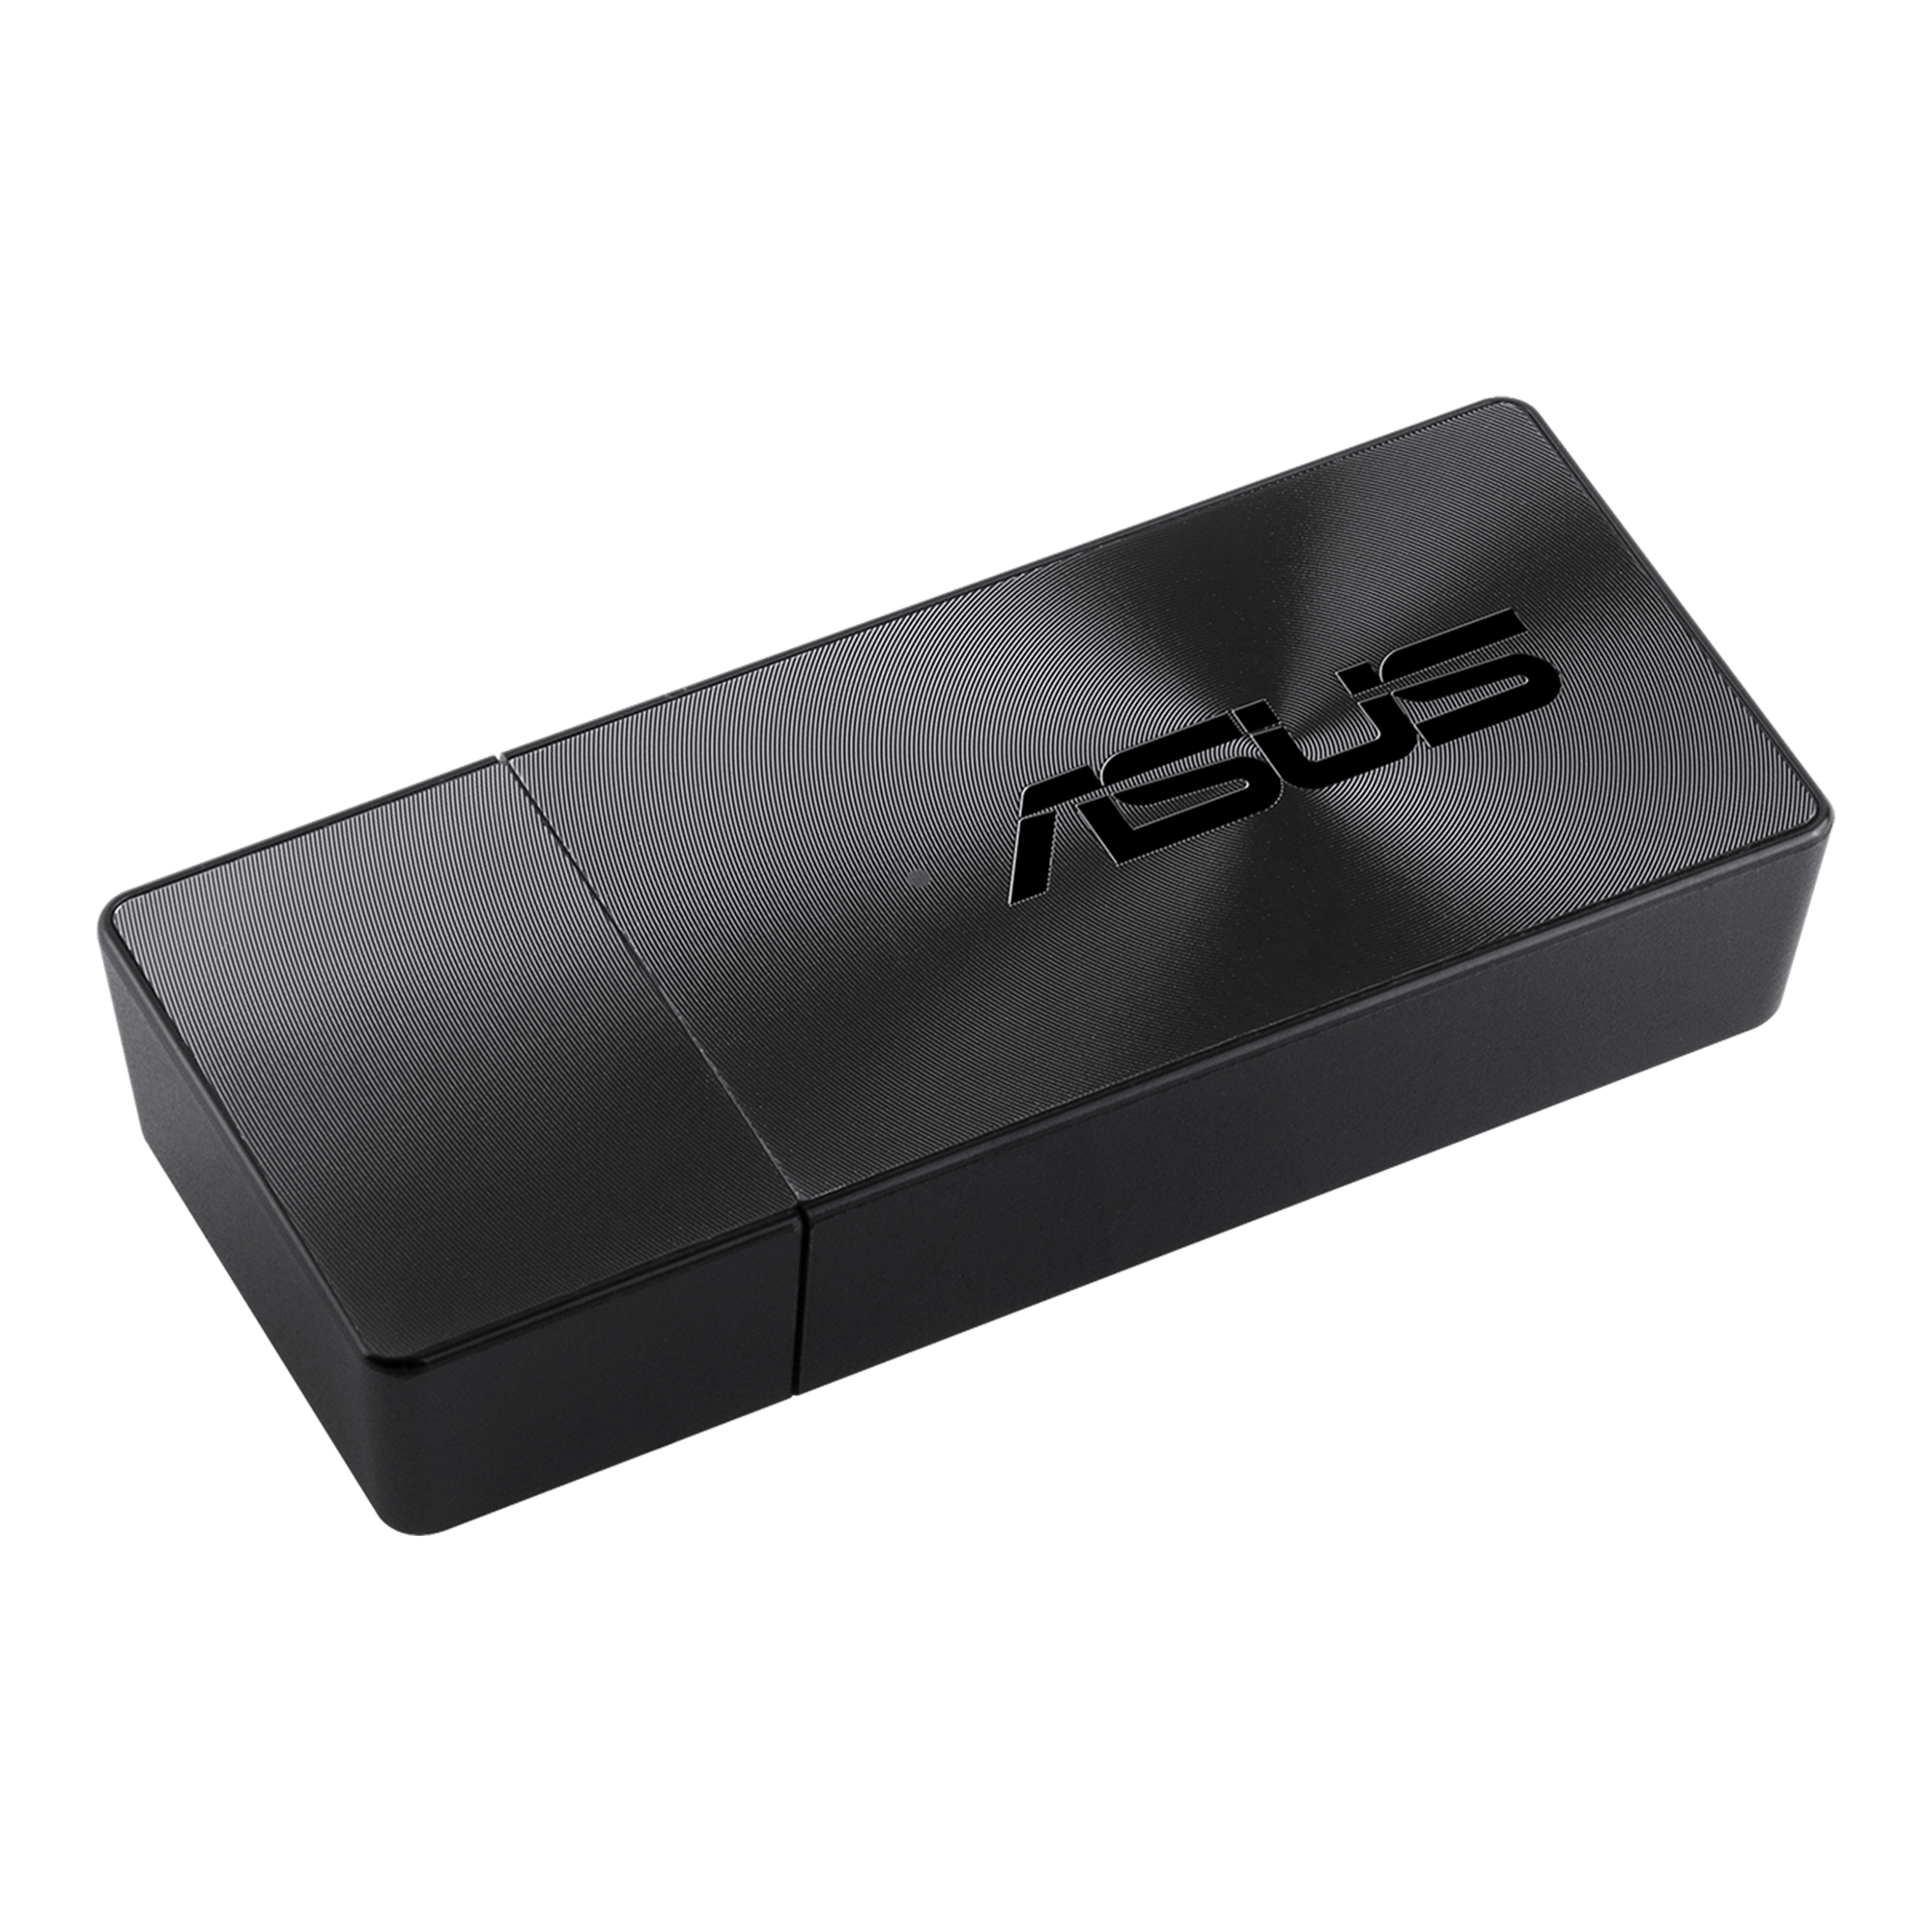 ASUS USB-AC55 B1 Manjaro Driver Installation - Featured